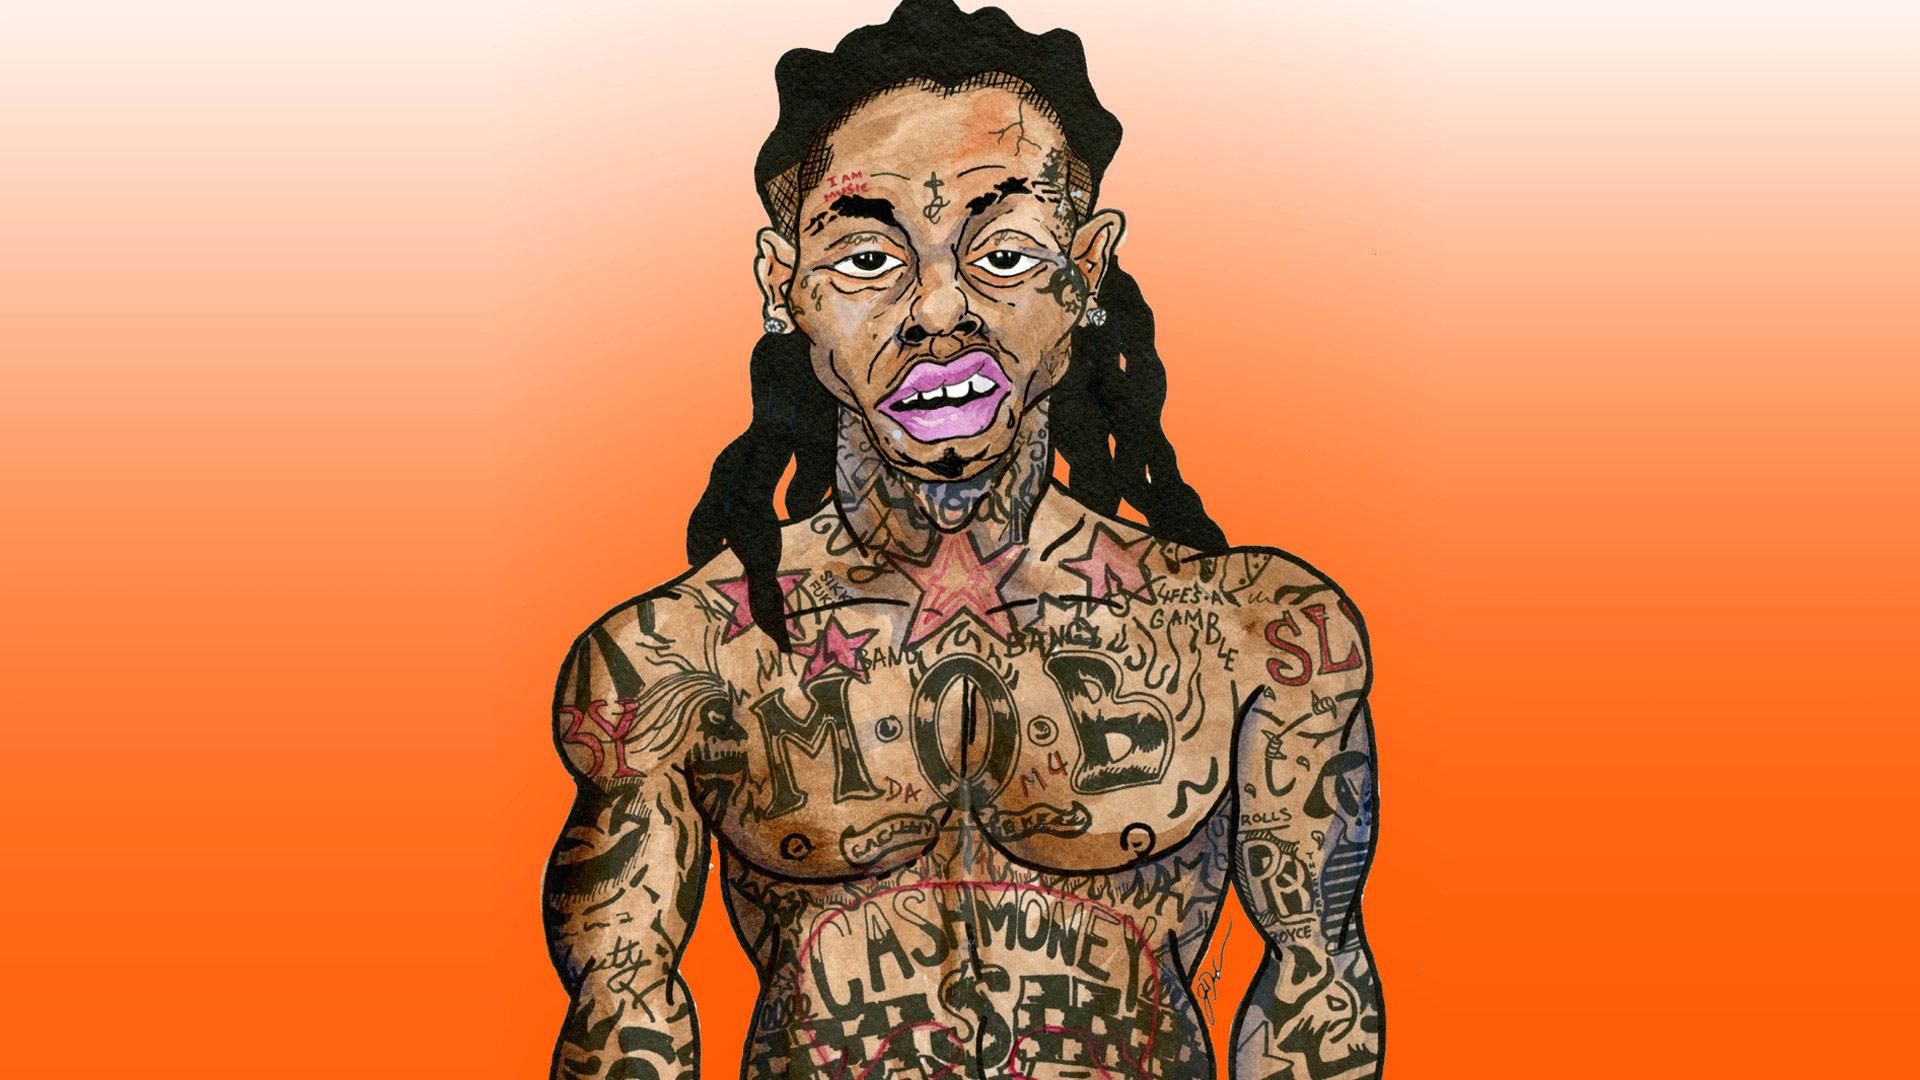 Lil Wayne Wallpaper Pack 87: Lil Wayne Wallpaper, 39 Lil Wayne Pics